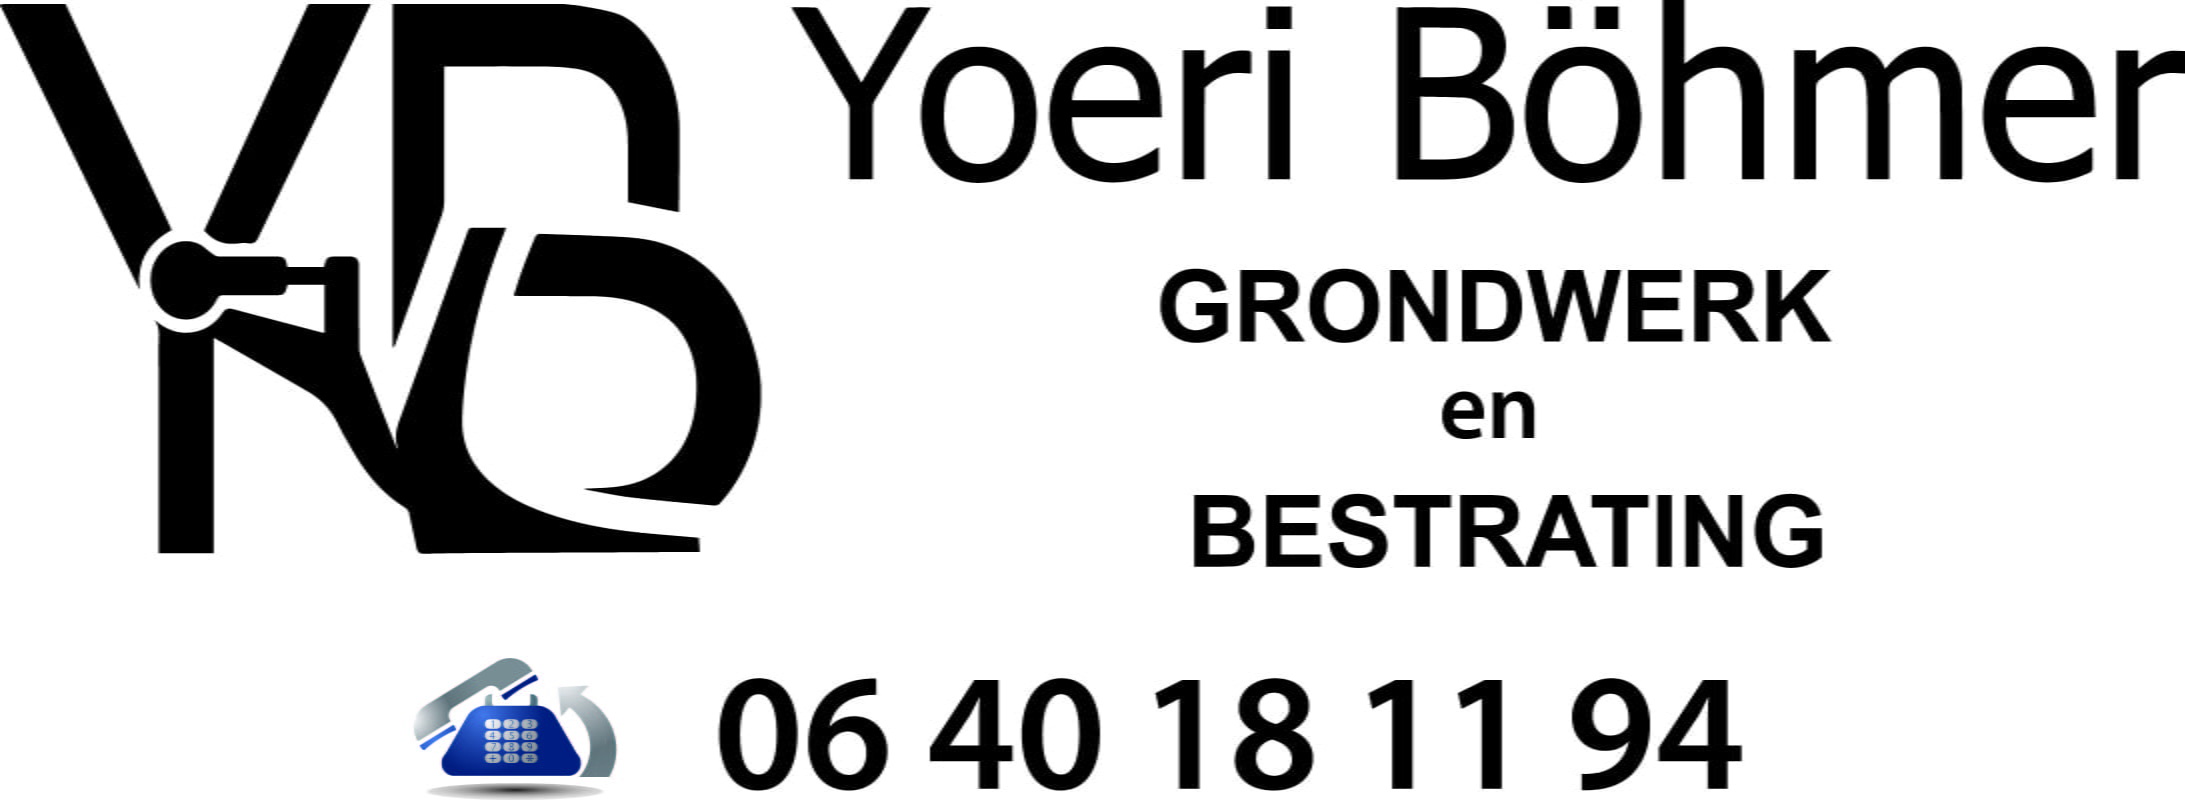 15. Youri Böhmer